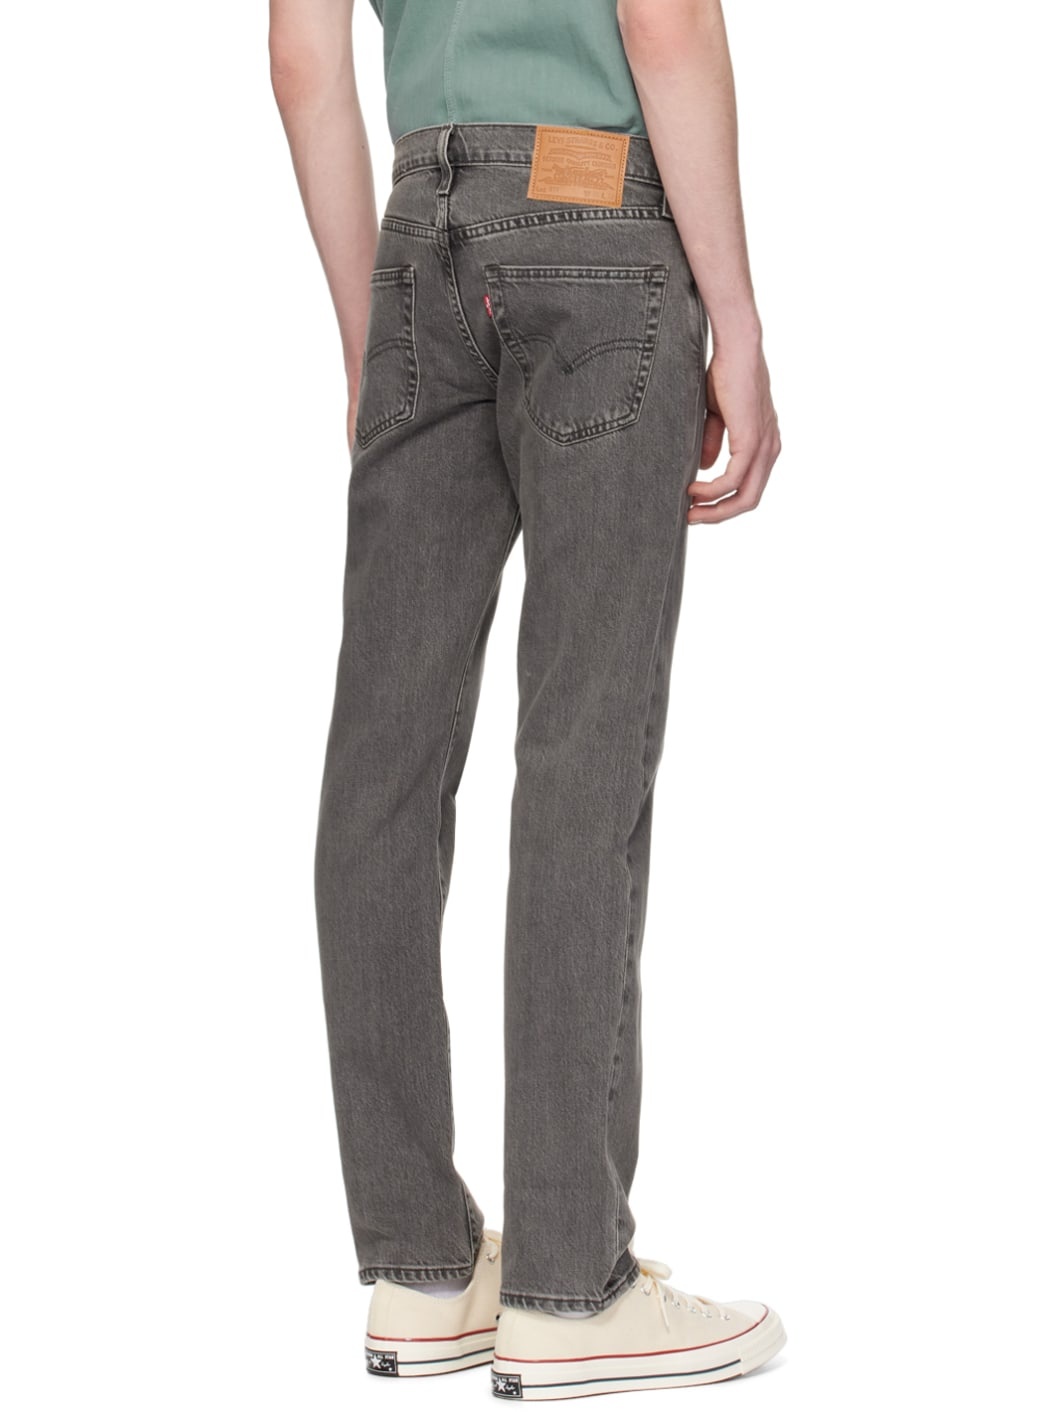 Gray 511 Jeans - 3